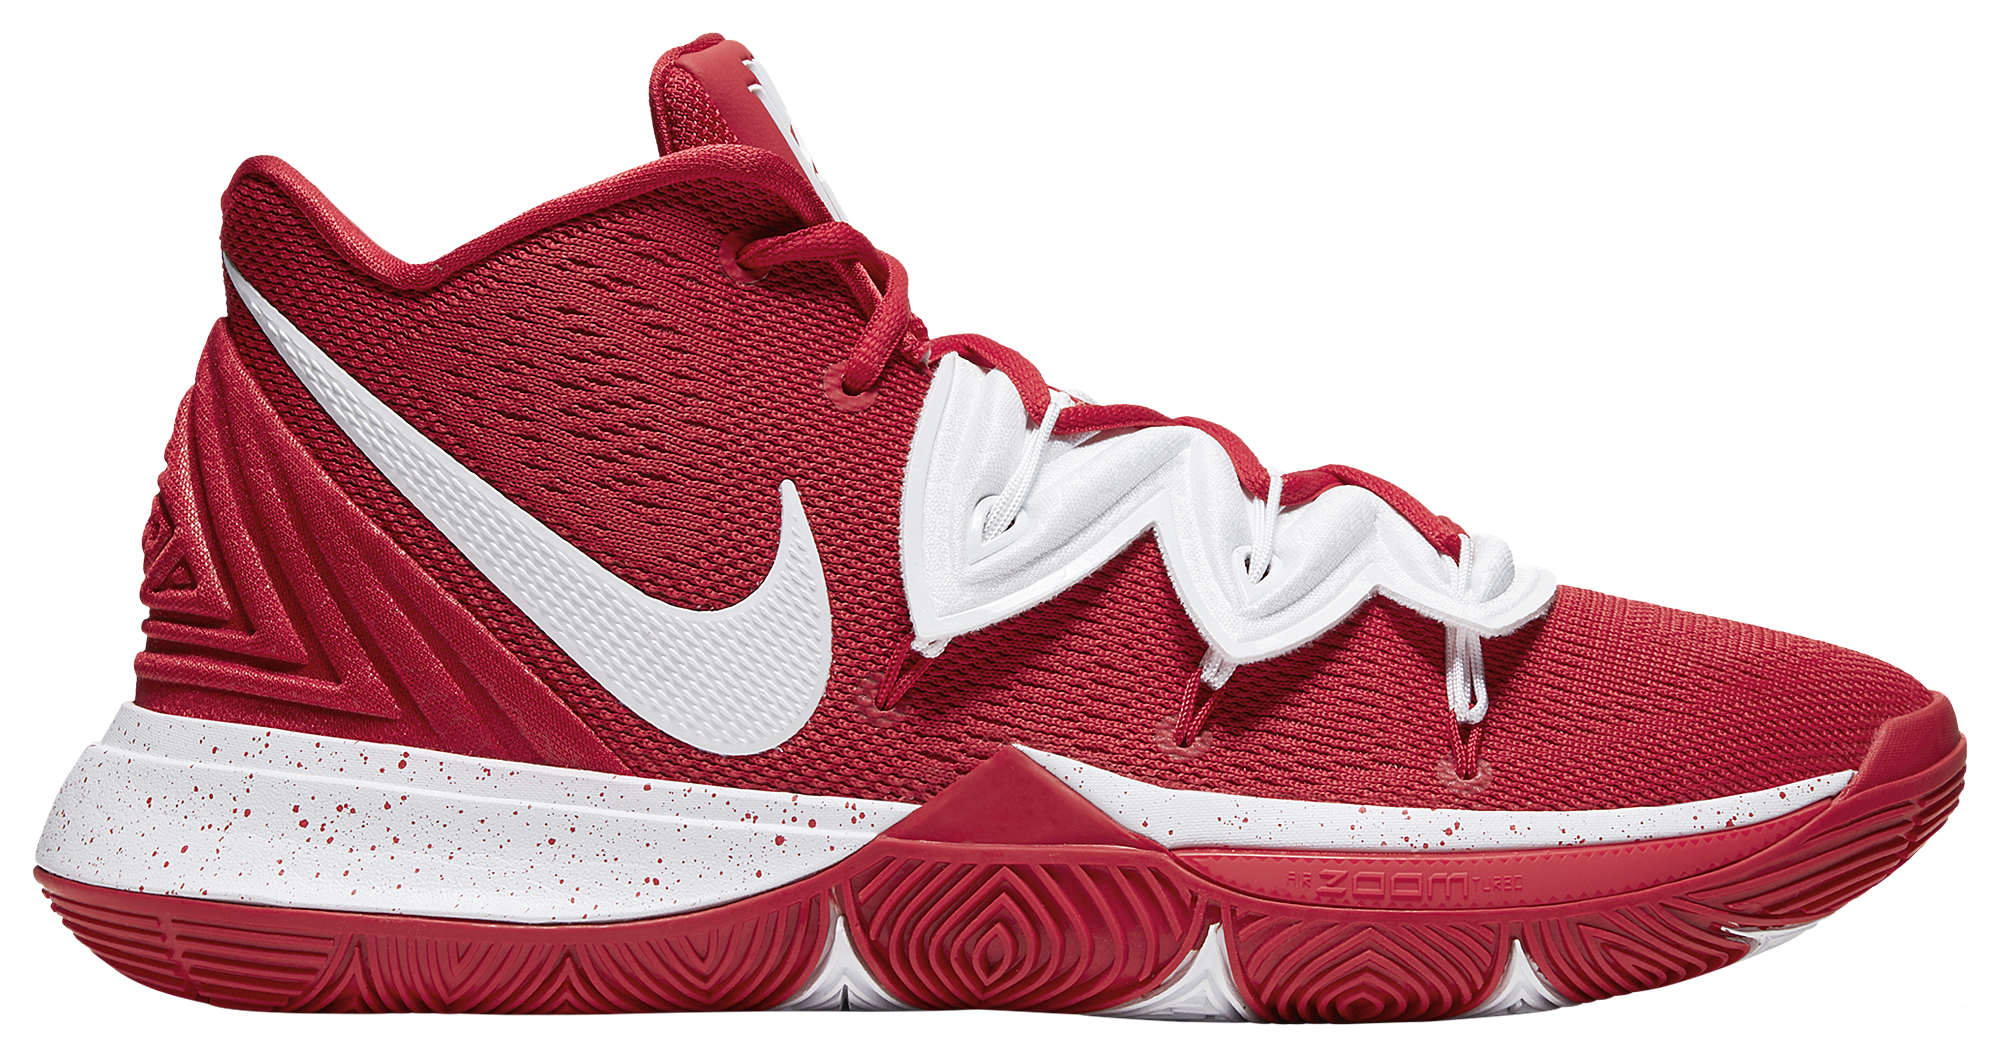 Sepatu Basket Nike Kyrie 5 Spongebob Squarepants.Pink JM